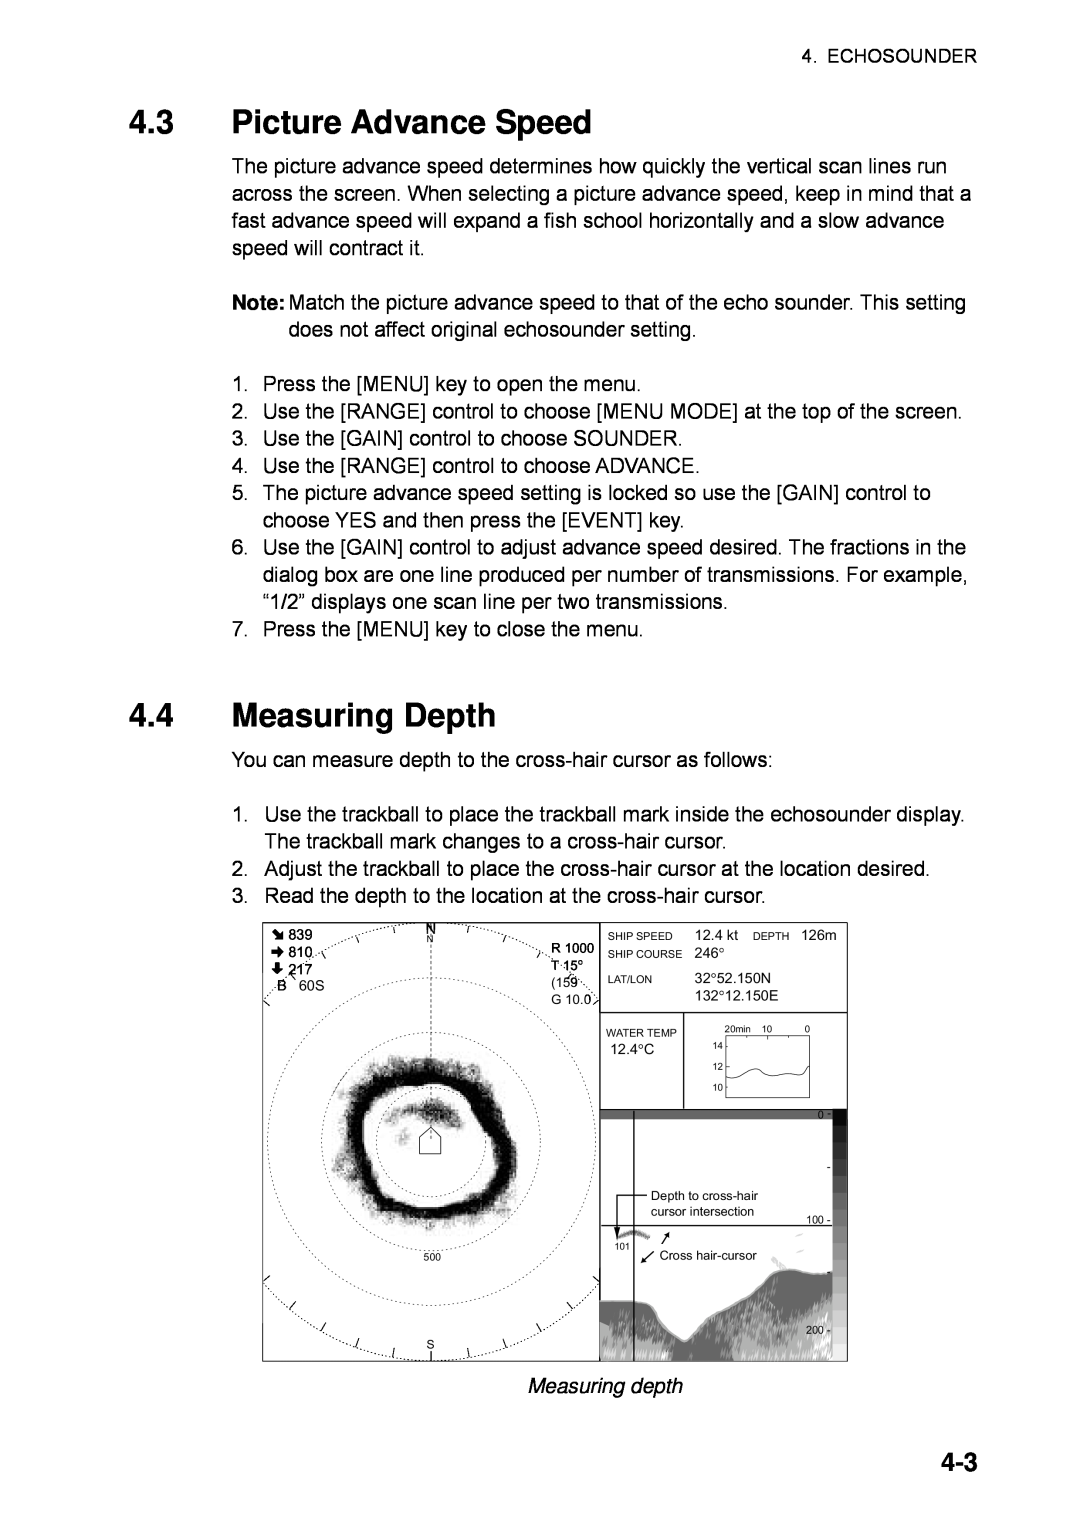 Furuno CSH-5L/CSH-8L manual Picture Advance Speed, Measuring Depth, Measuring depth 